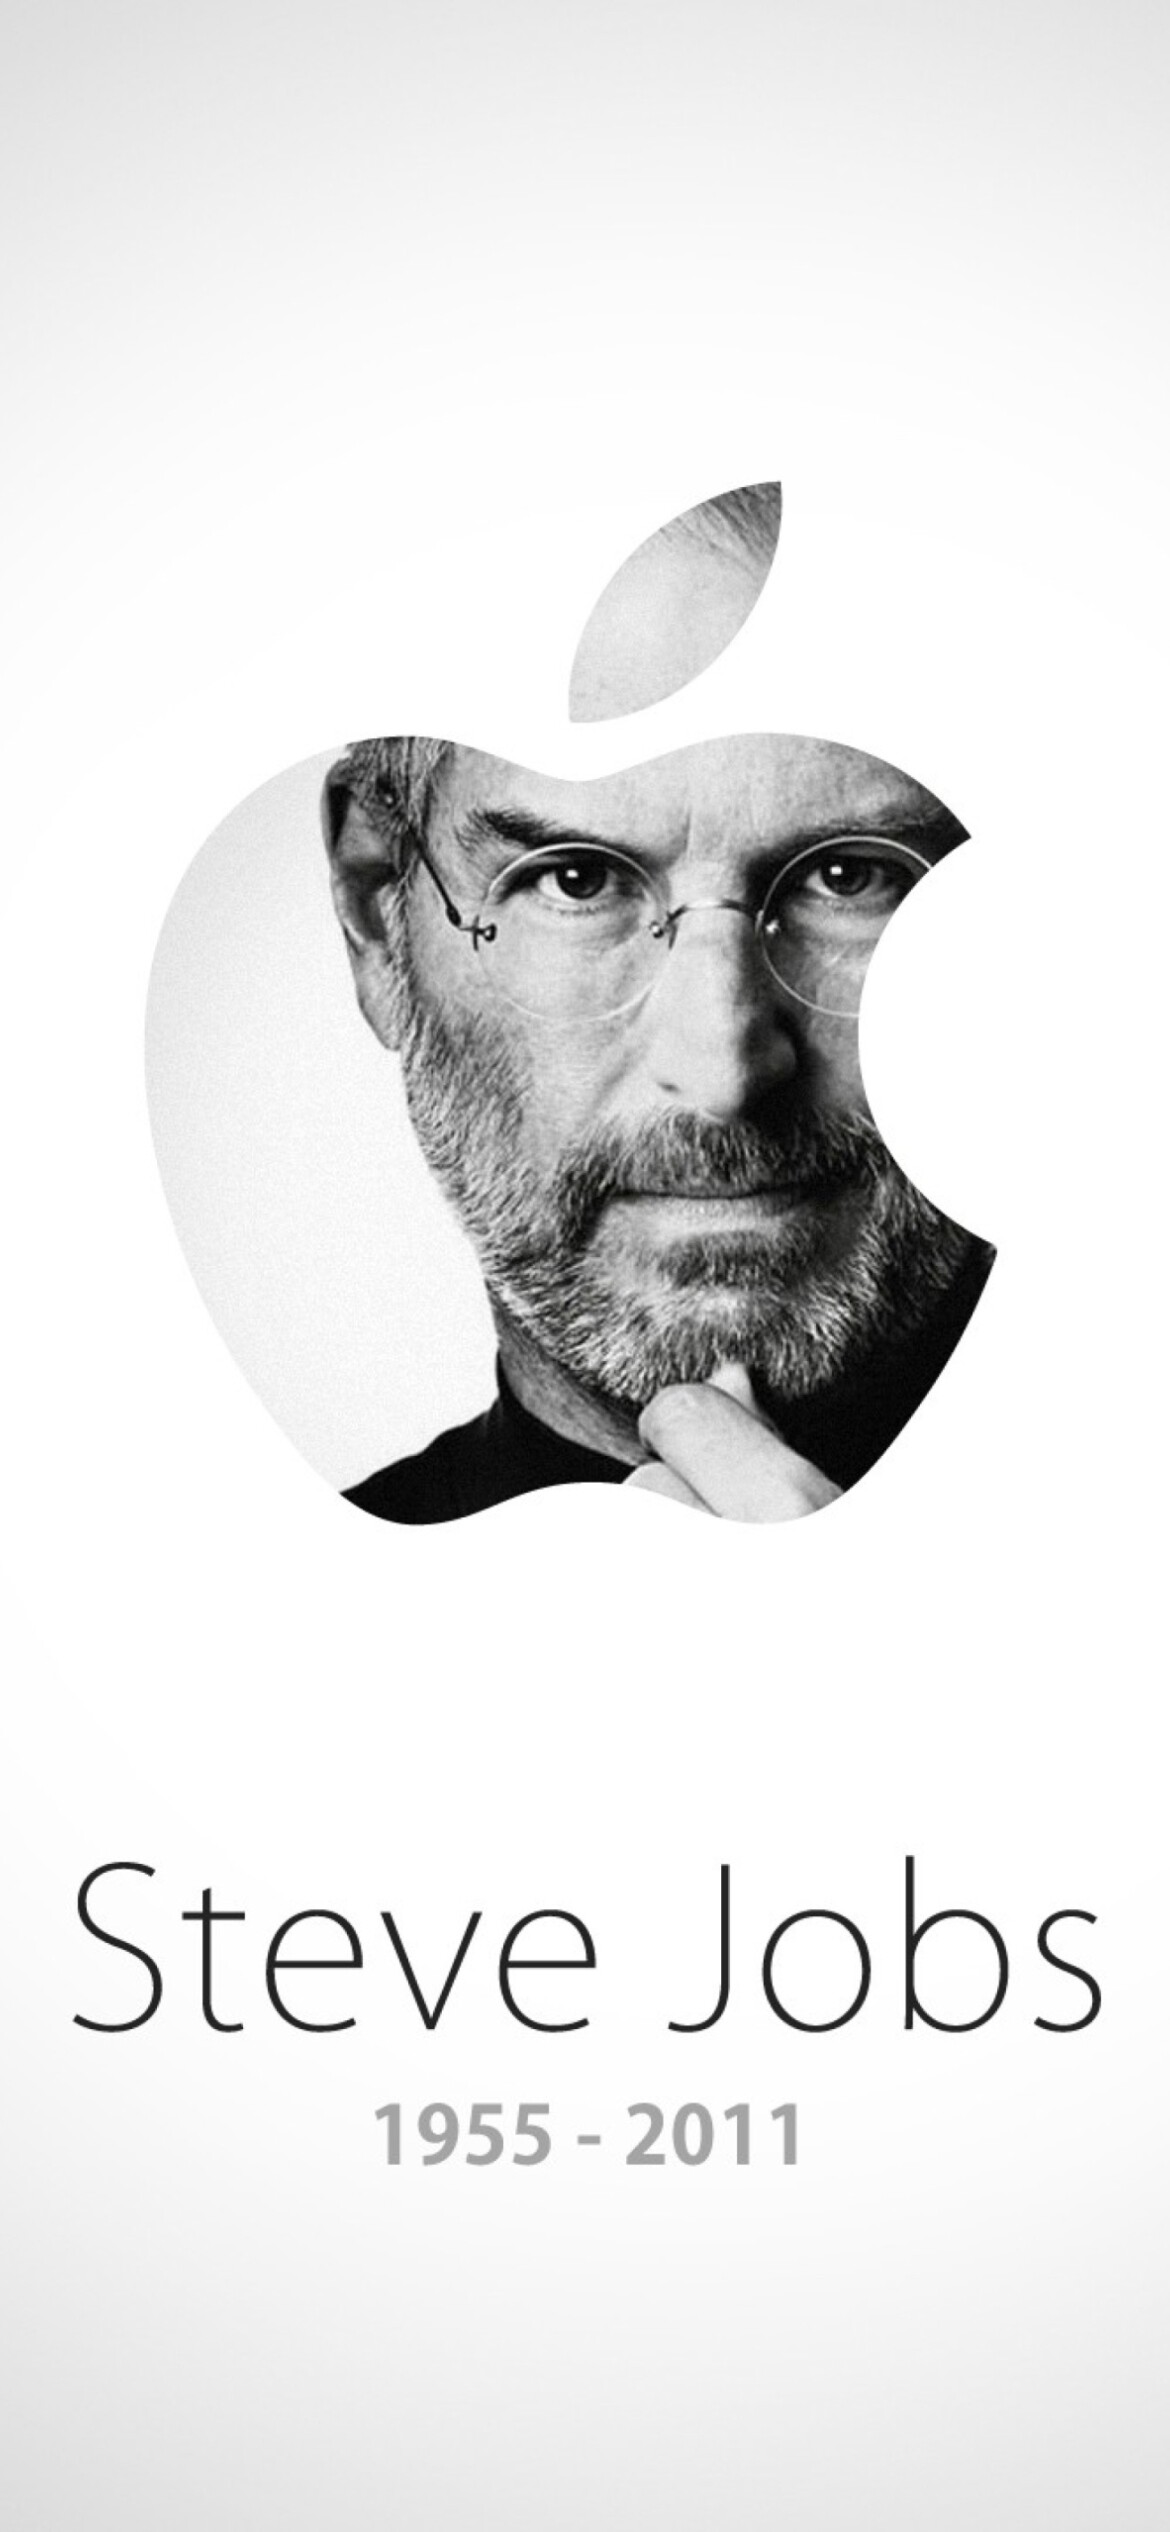 Steve Jobs: A founder and leader of Apple Inc., An American entrepreneur, industrial designer. 1170x2540 HD Wallpaper.